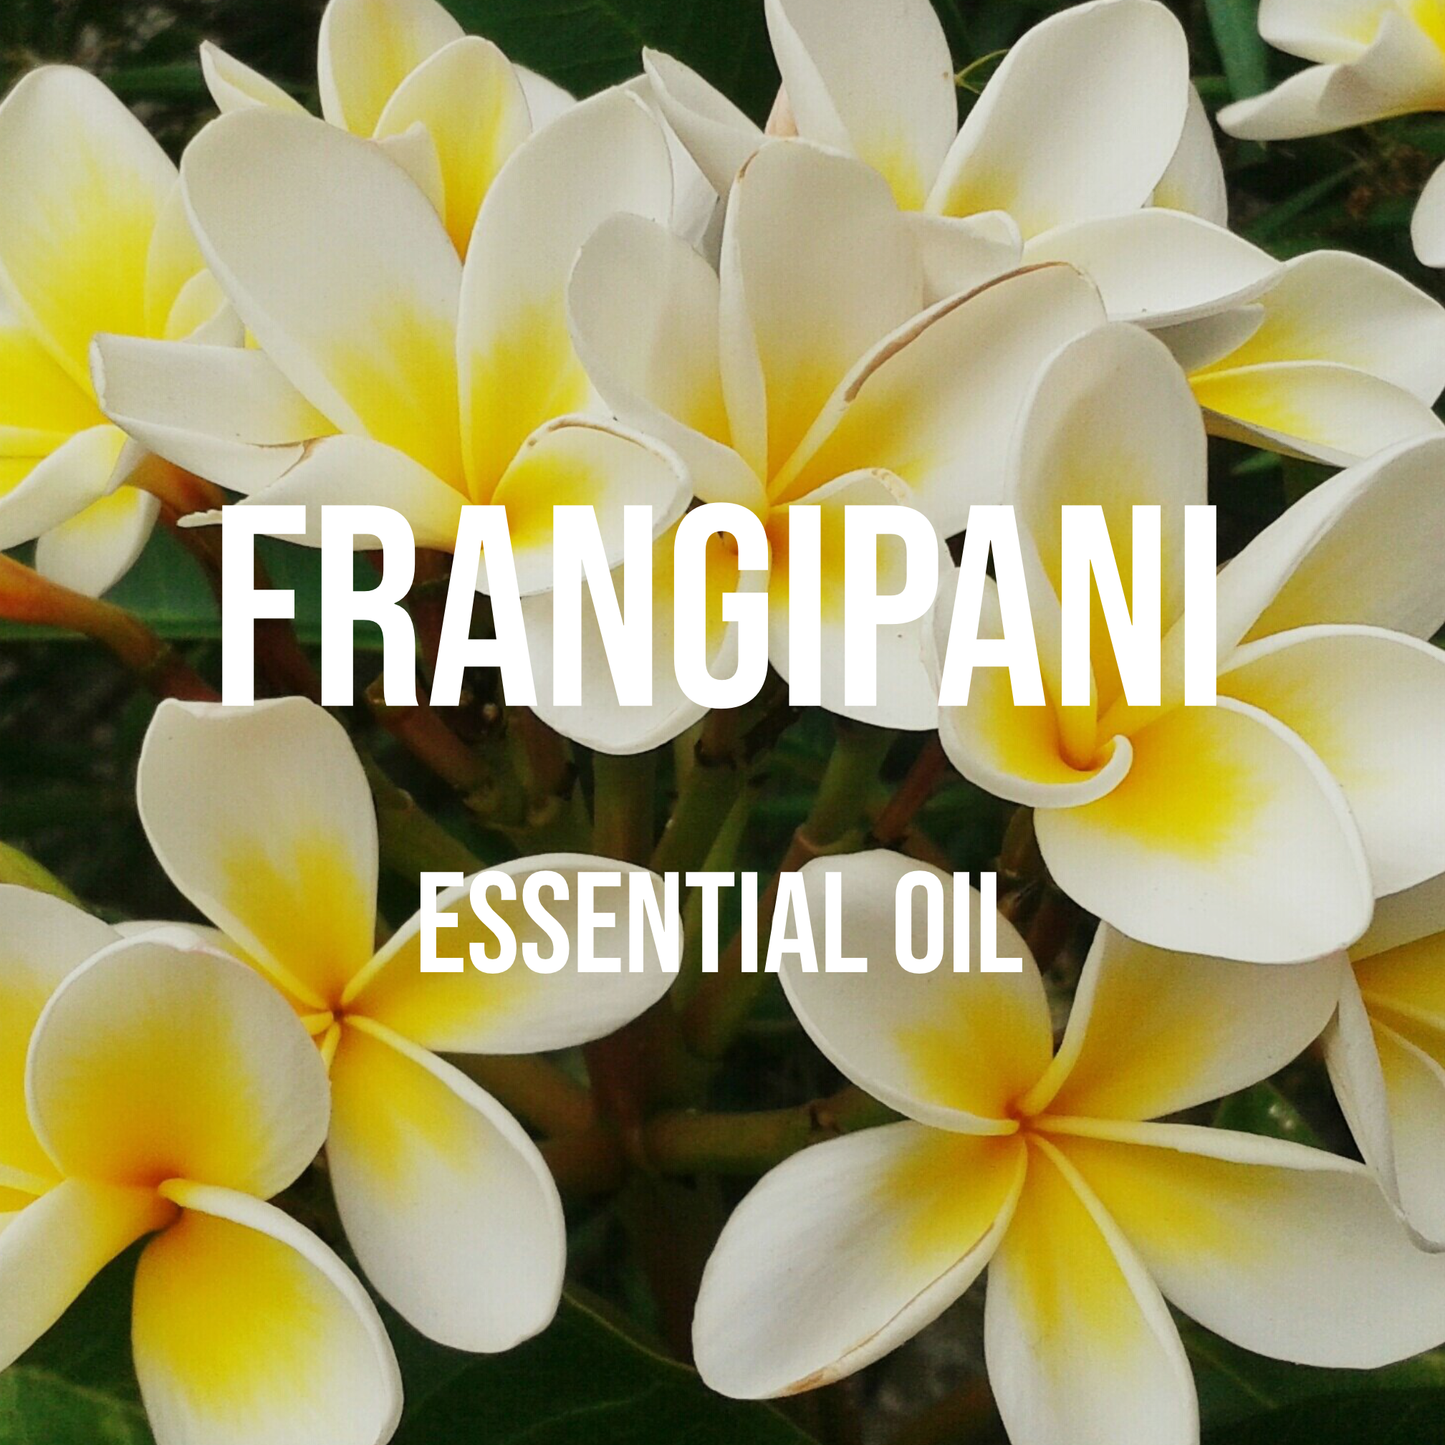 Frangipani (Plumeria) Essential Oil